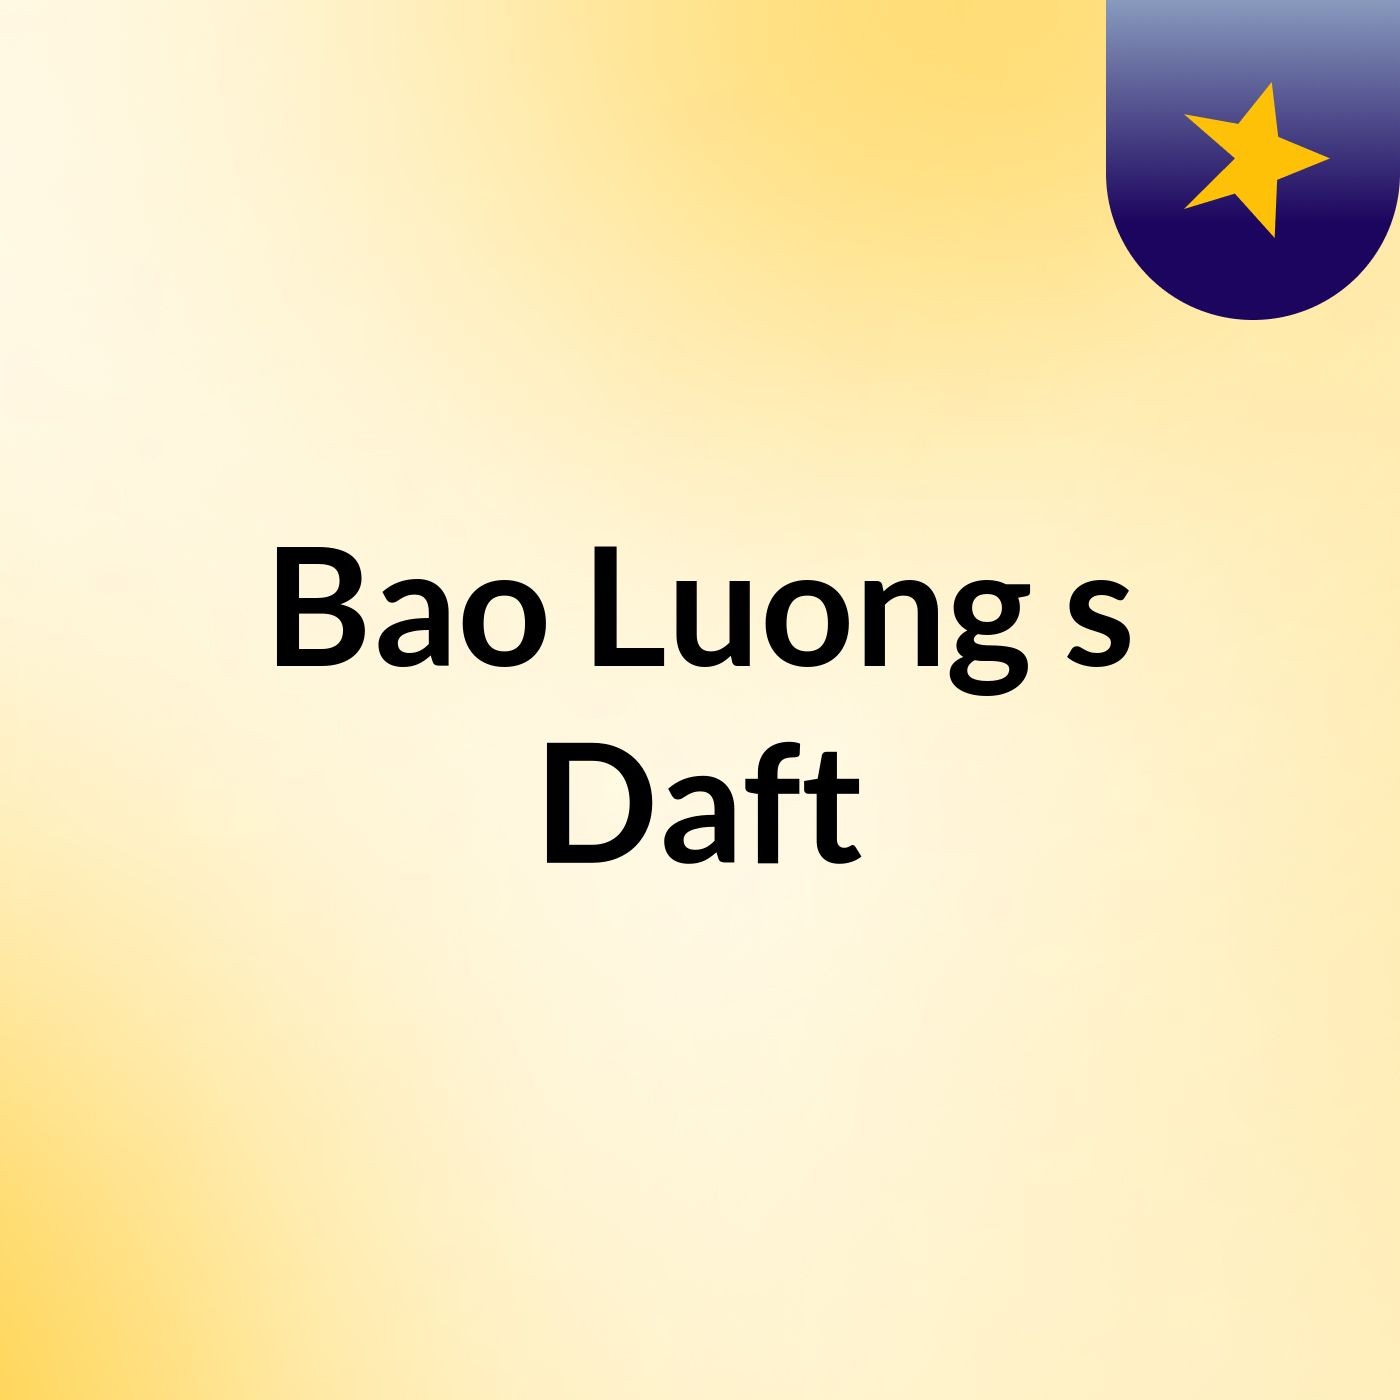 Episode 6 - Bao Luong's Daft